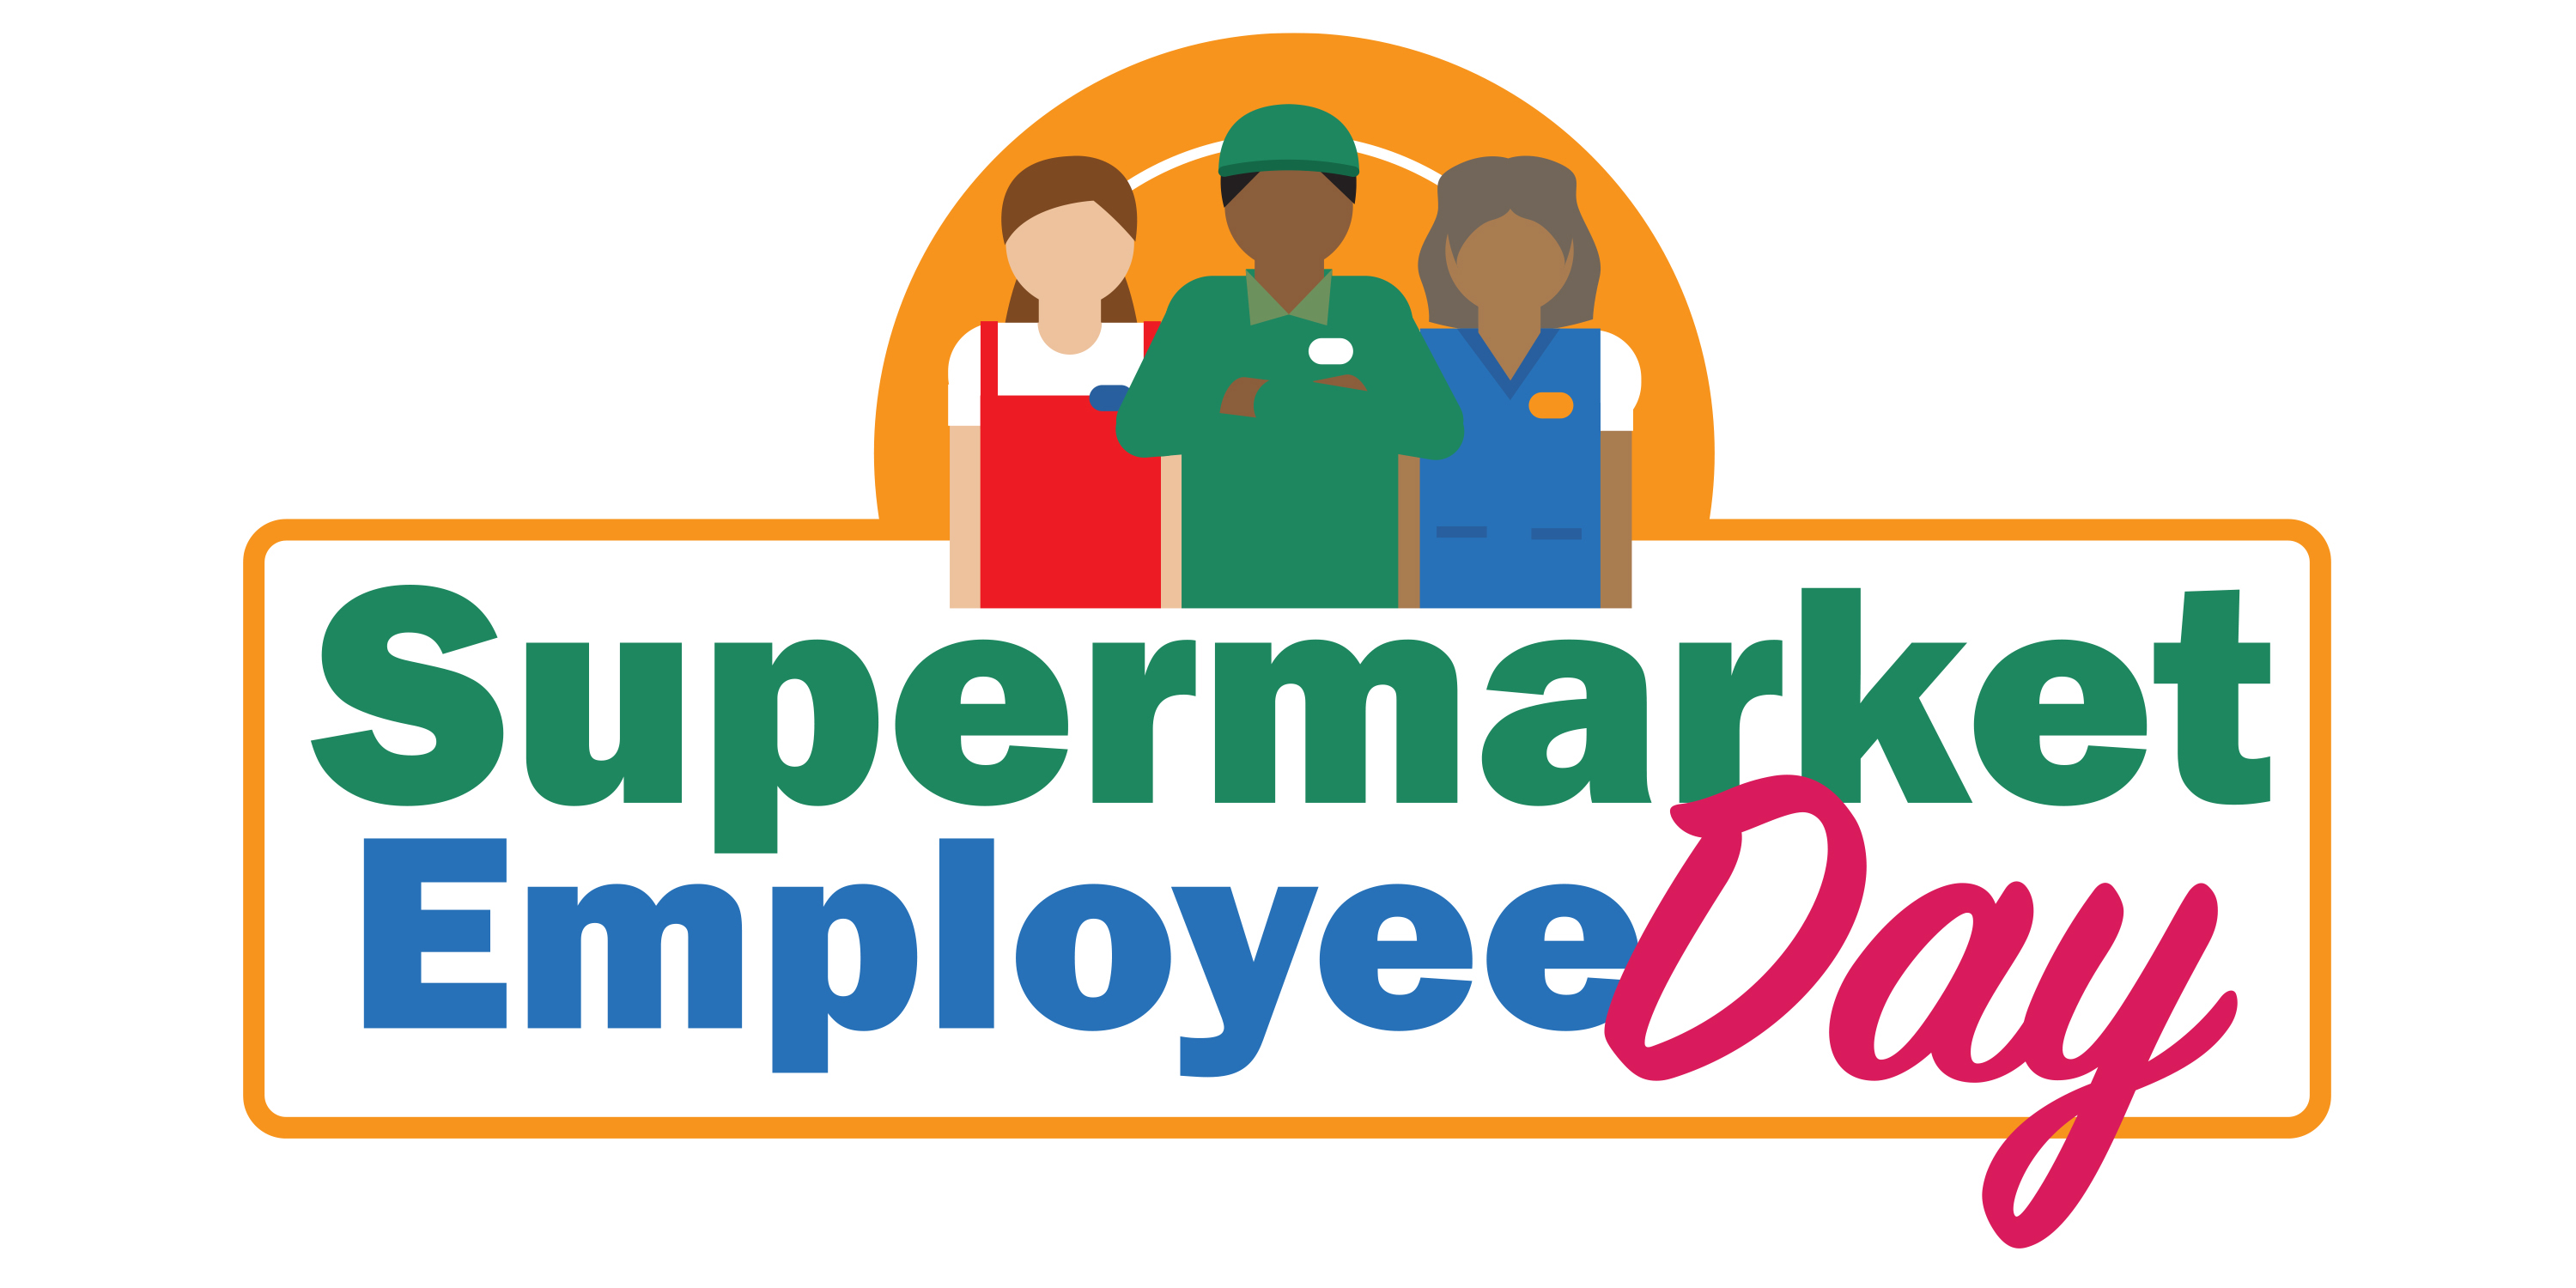 FMI supermarket employee day sed-blank_jpg.jpg